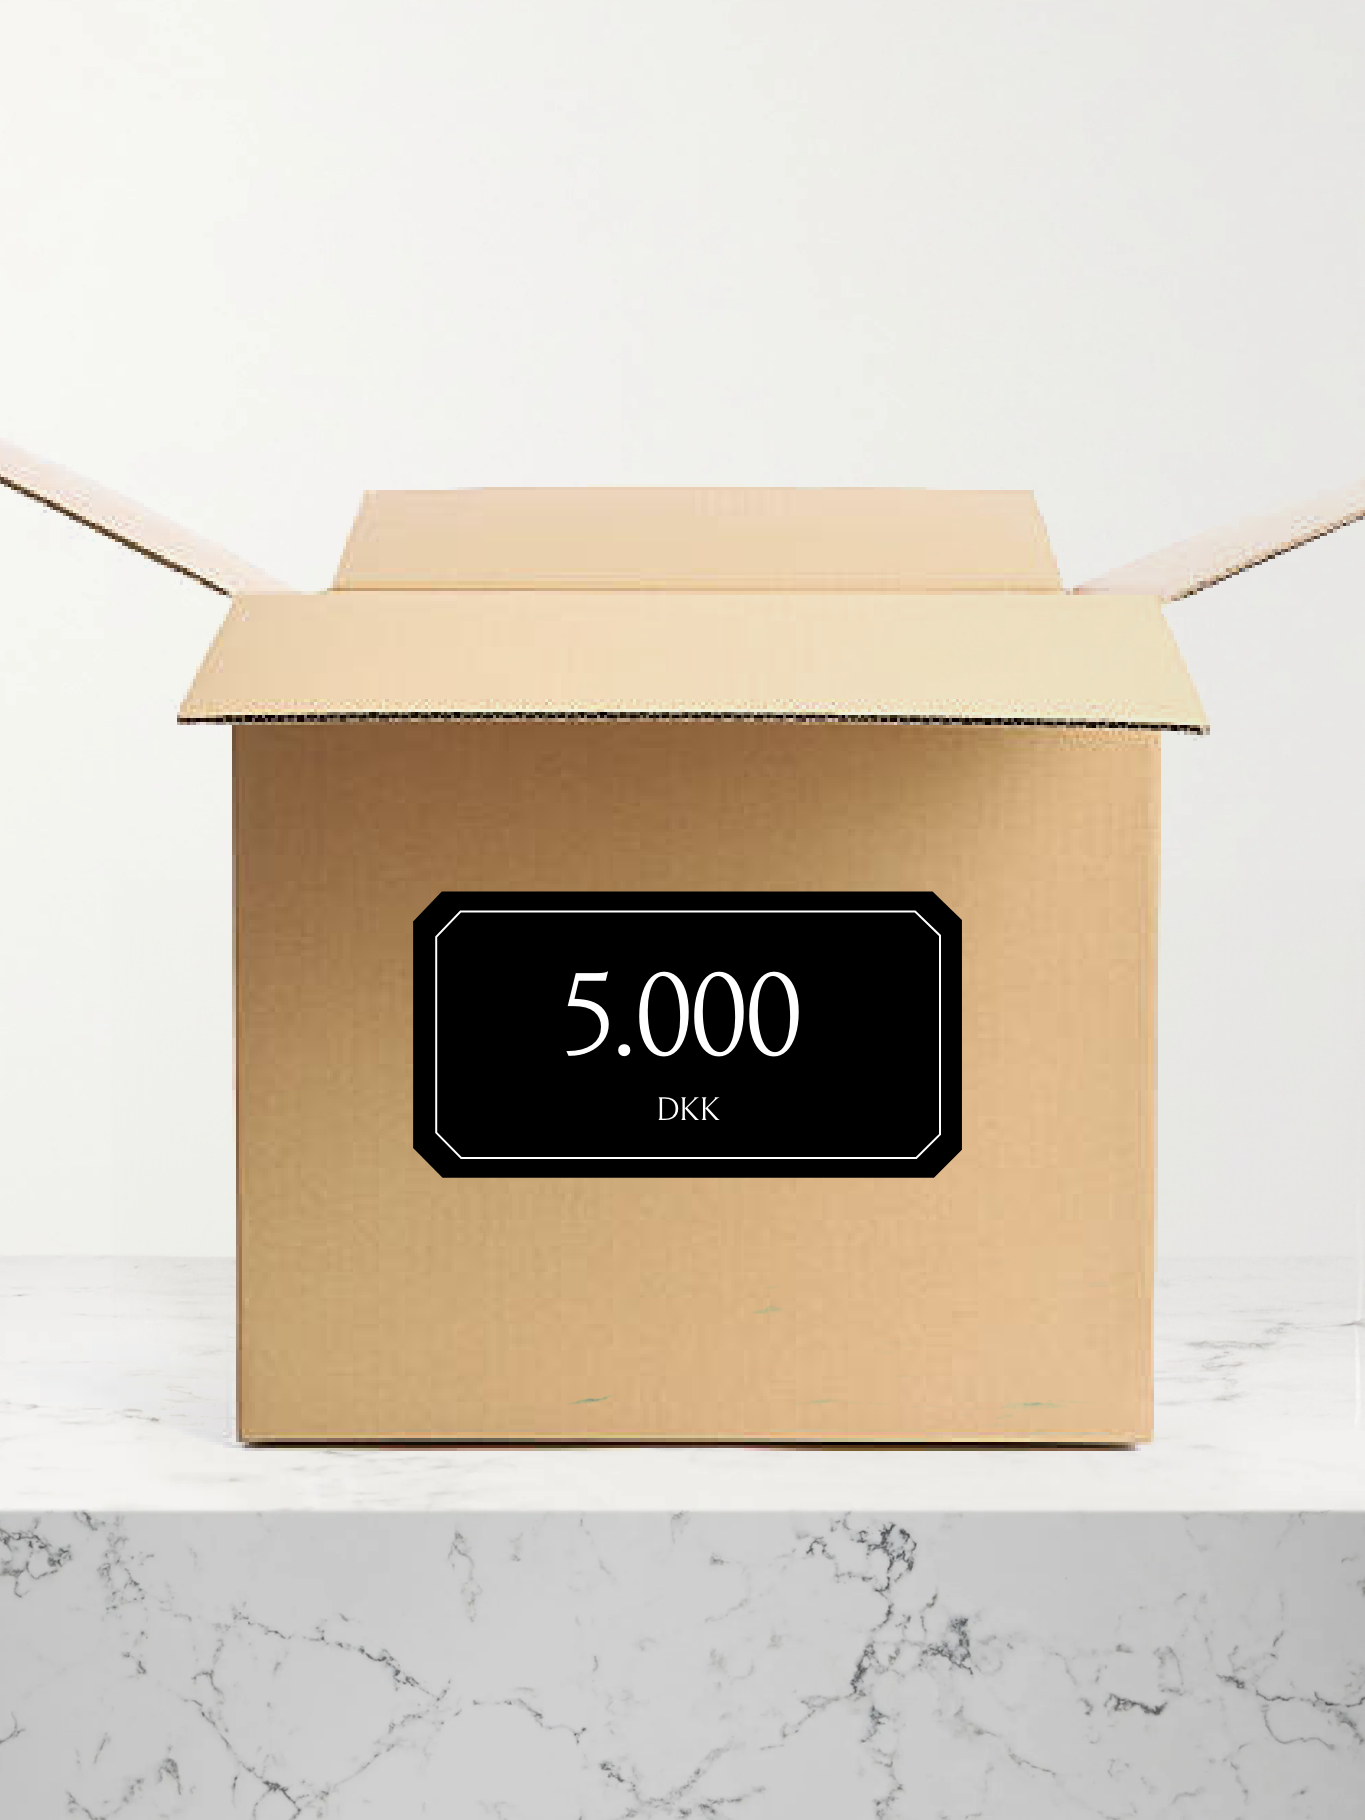 MYSTERY BOX FOR 5.000 DKK